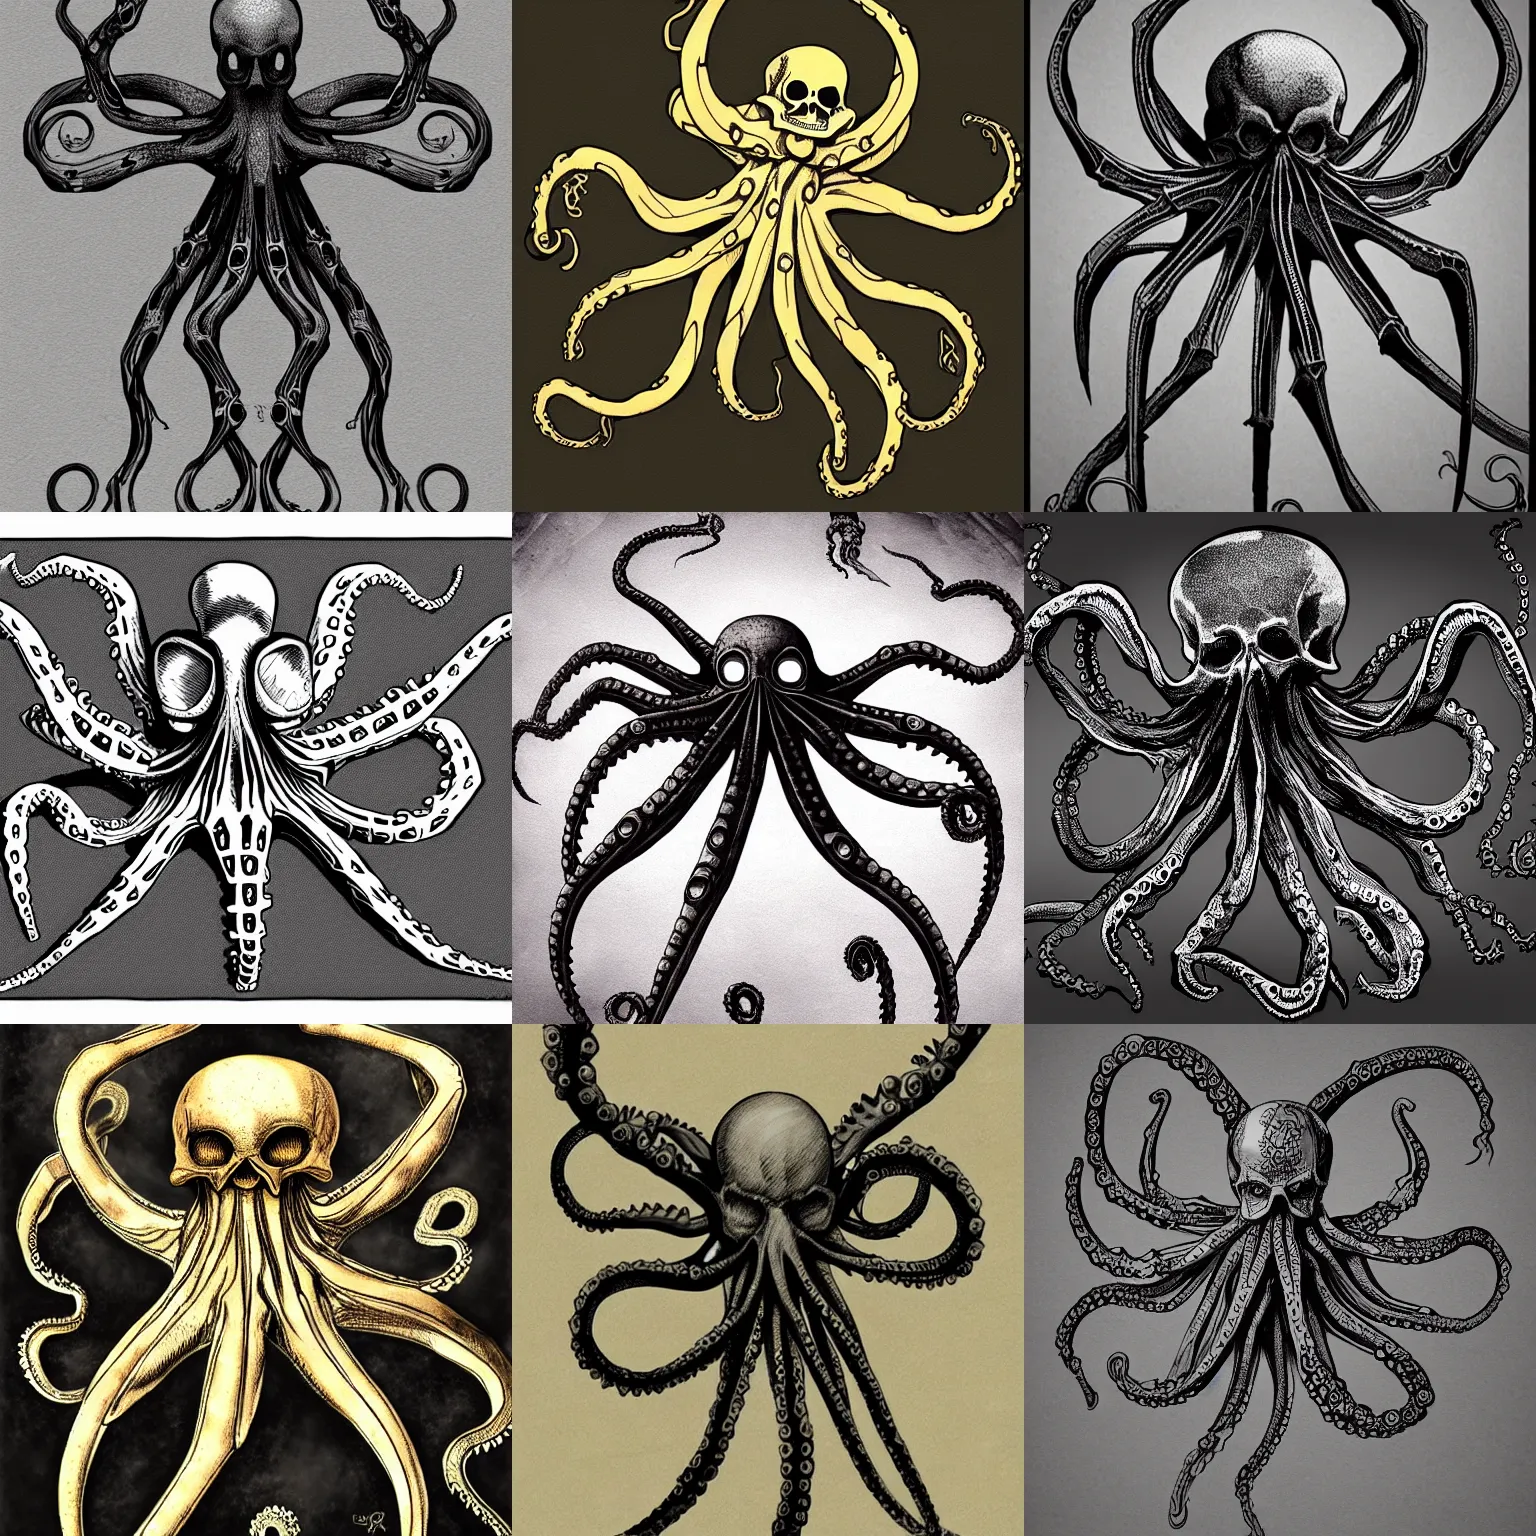 Prompt: a skeletal octopus, fantasy art